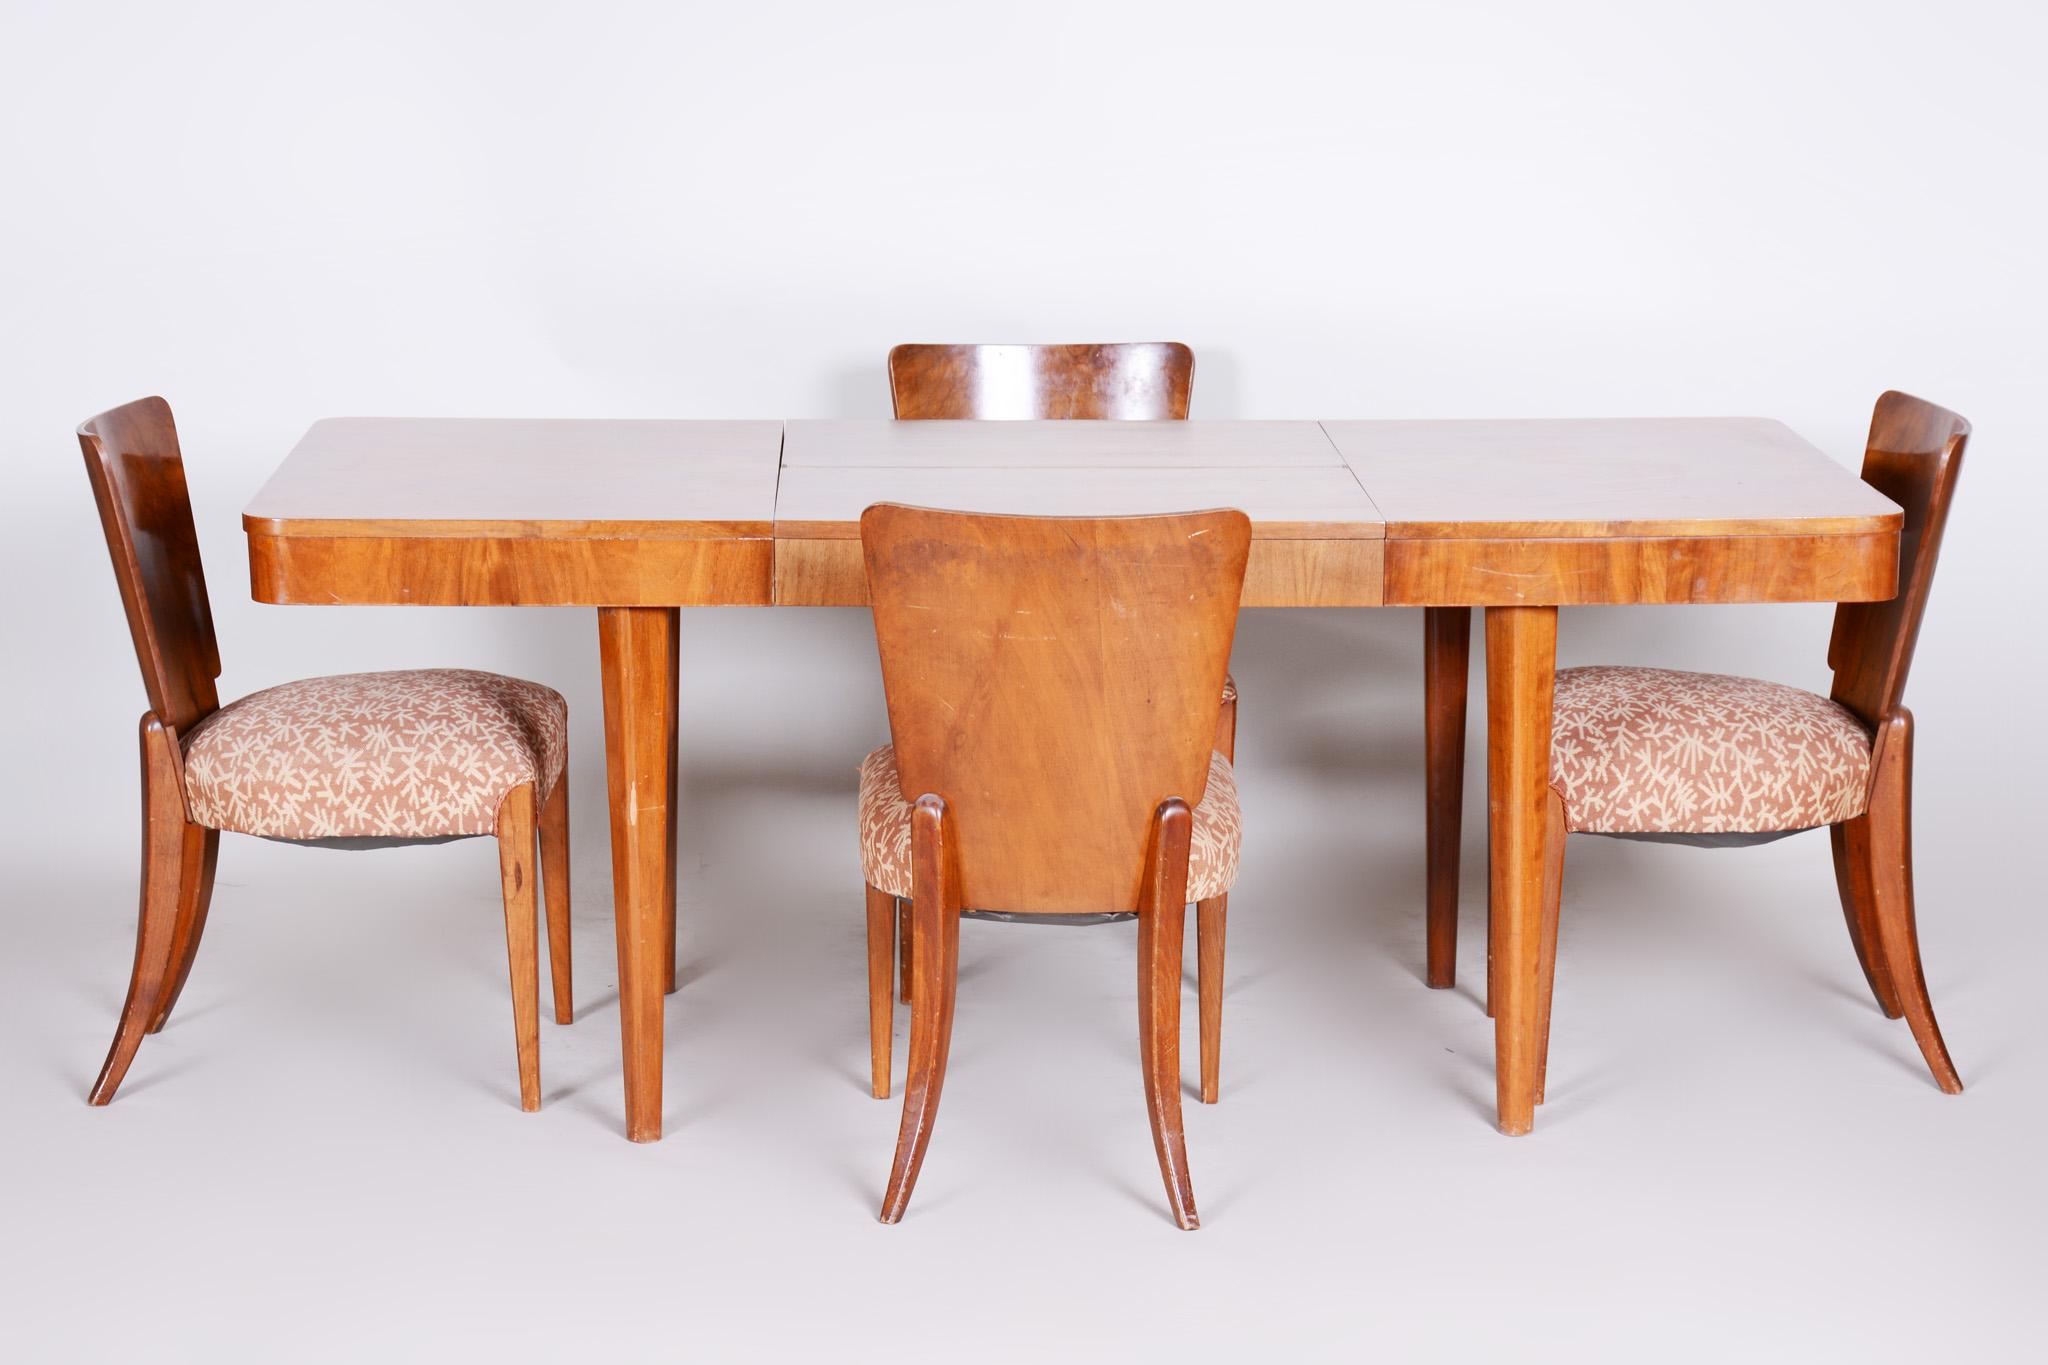 Czech Dining Table, Designed by Jindrich Halabala, 1940s, Made by Up Závody For Sale